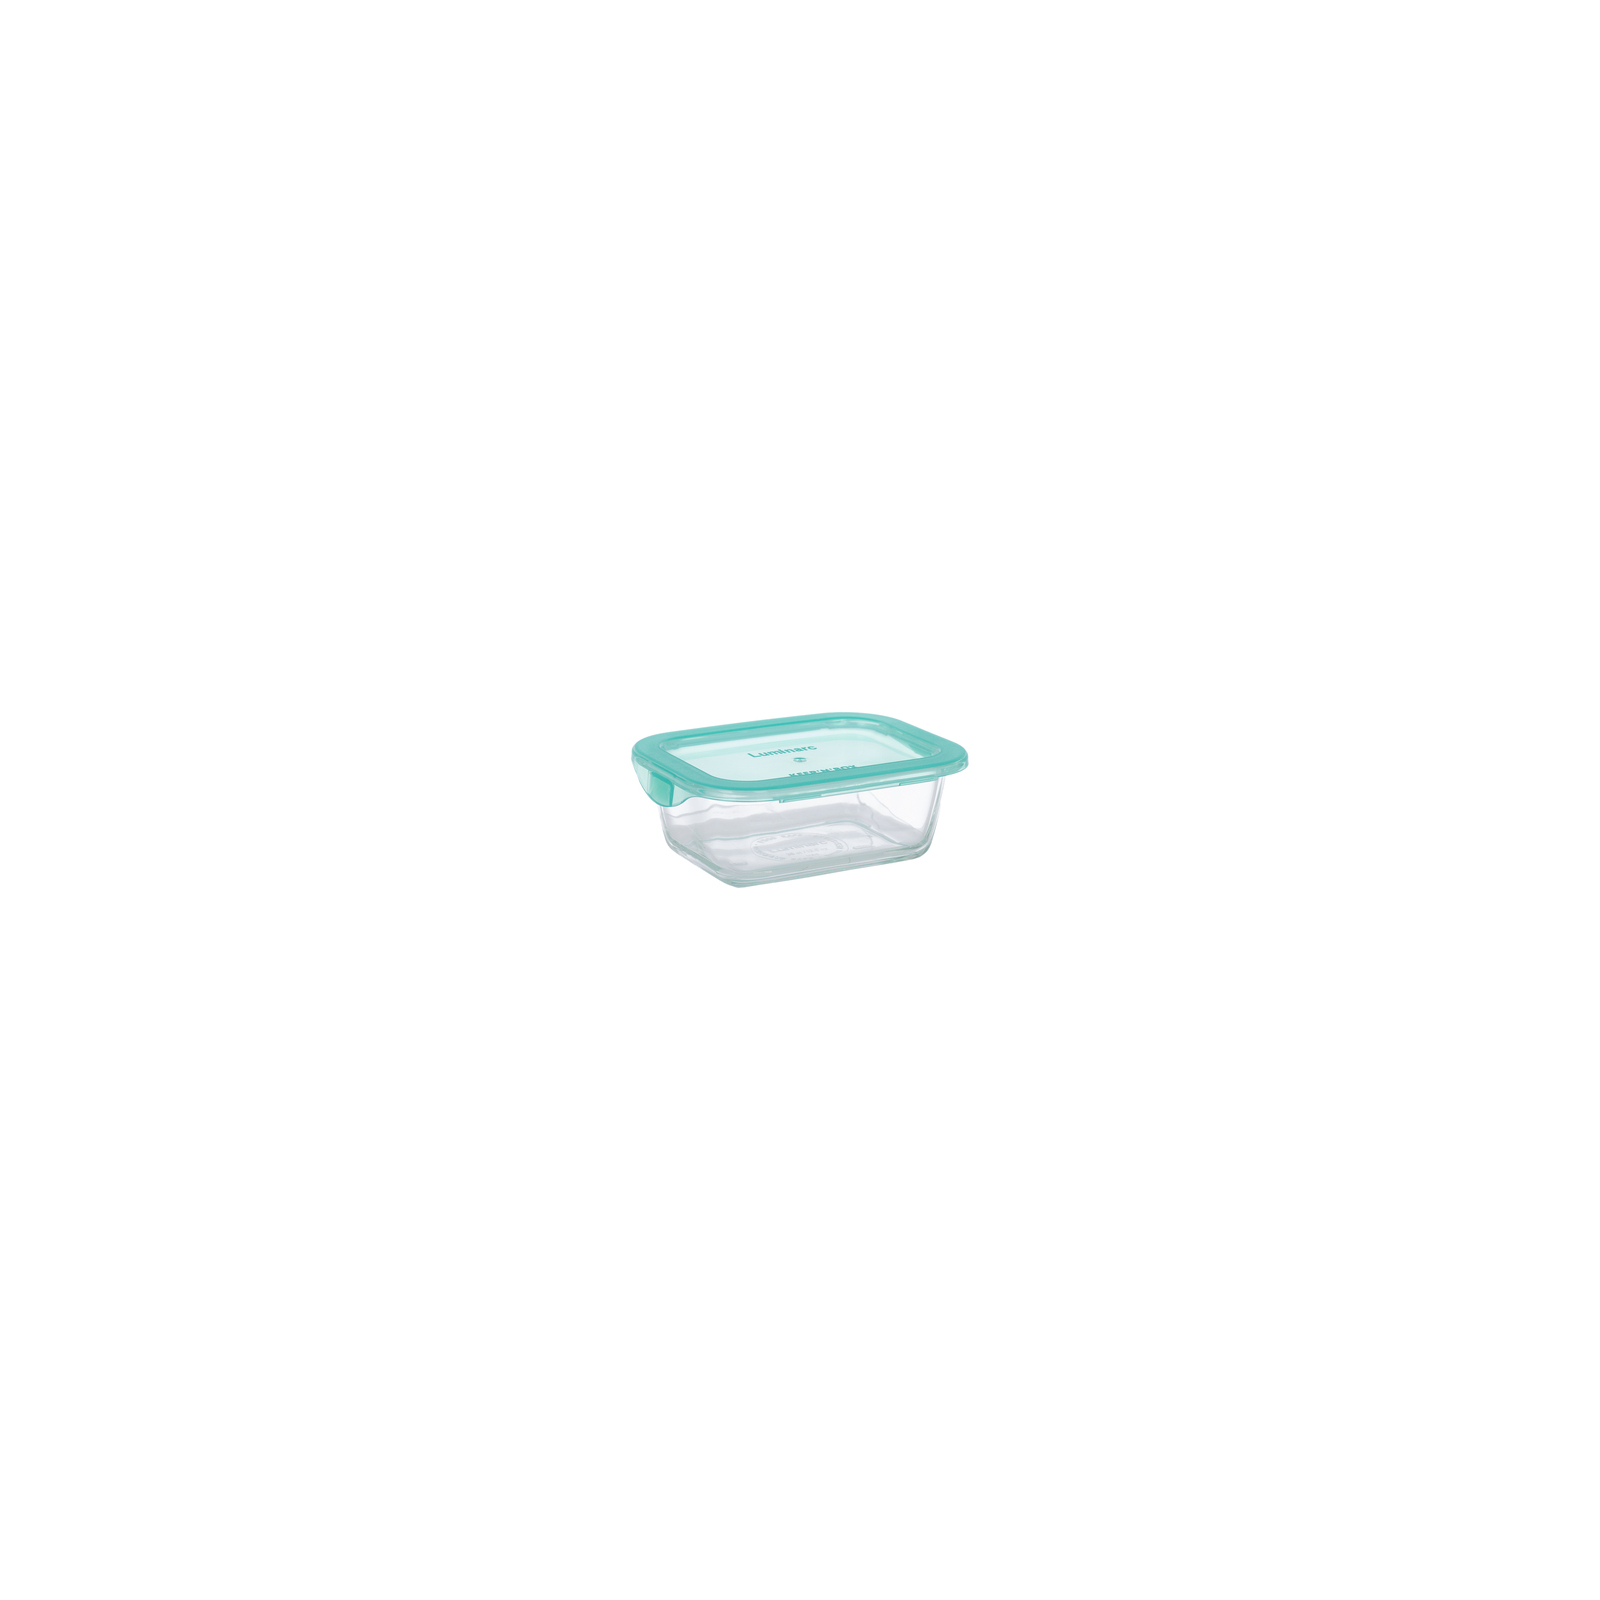 Пищевой контейнер Luminarc Keep'n Box Lagoon набор 3шт прямоуг. 380мл/820мл/1220мл + су (P6634) изображение 6